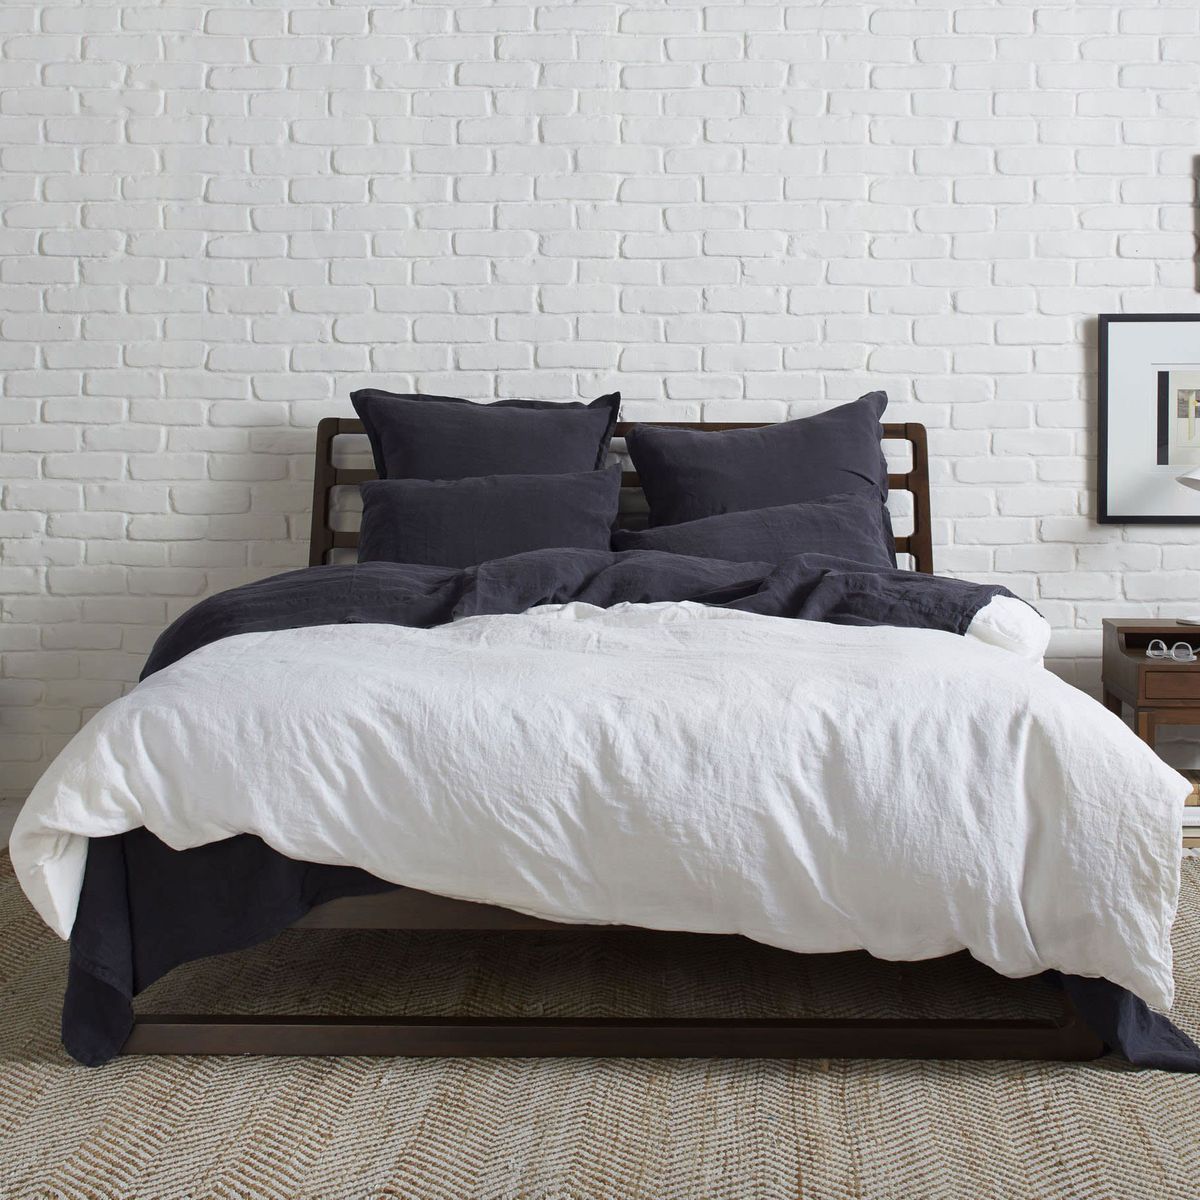 Luxury Dorney Duvet Set Ouilt Cover Reversible With Pillowcase In All Sizes 